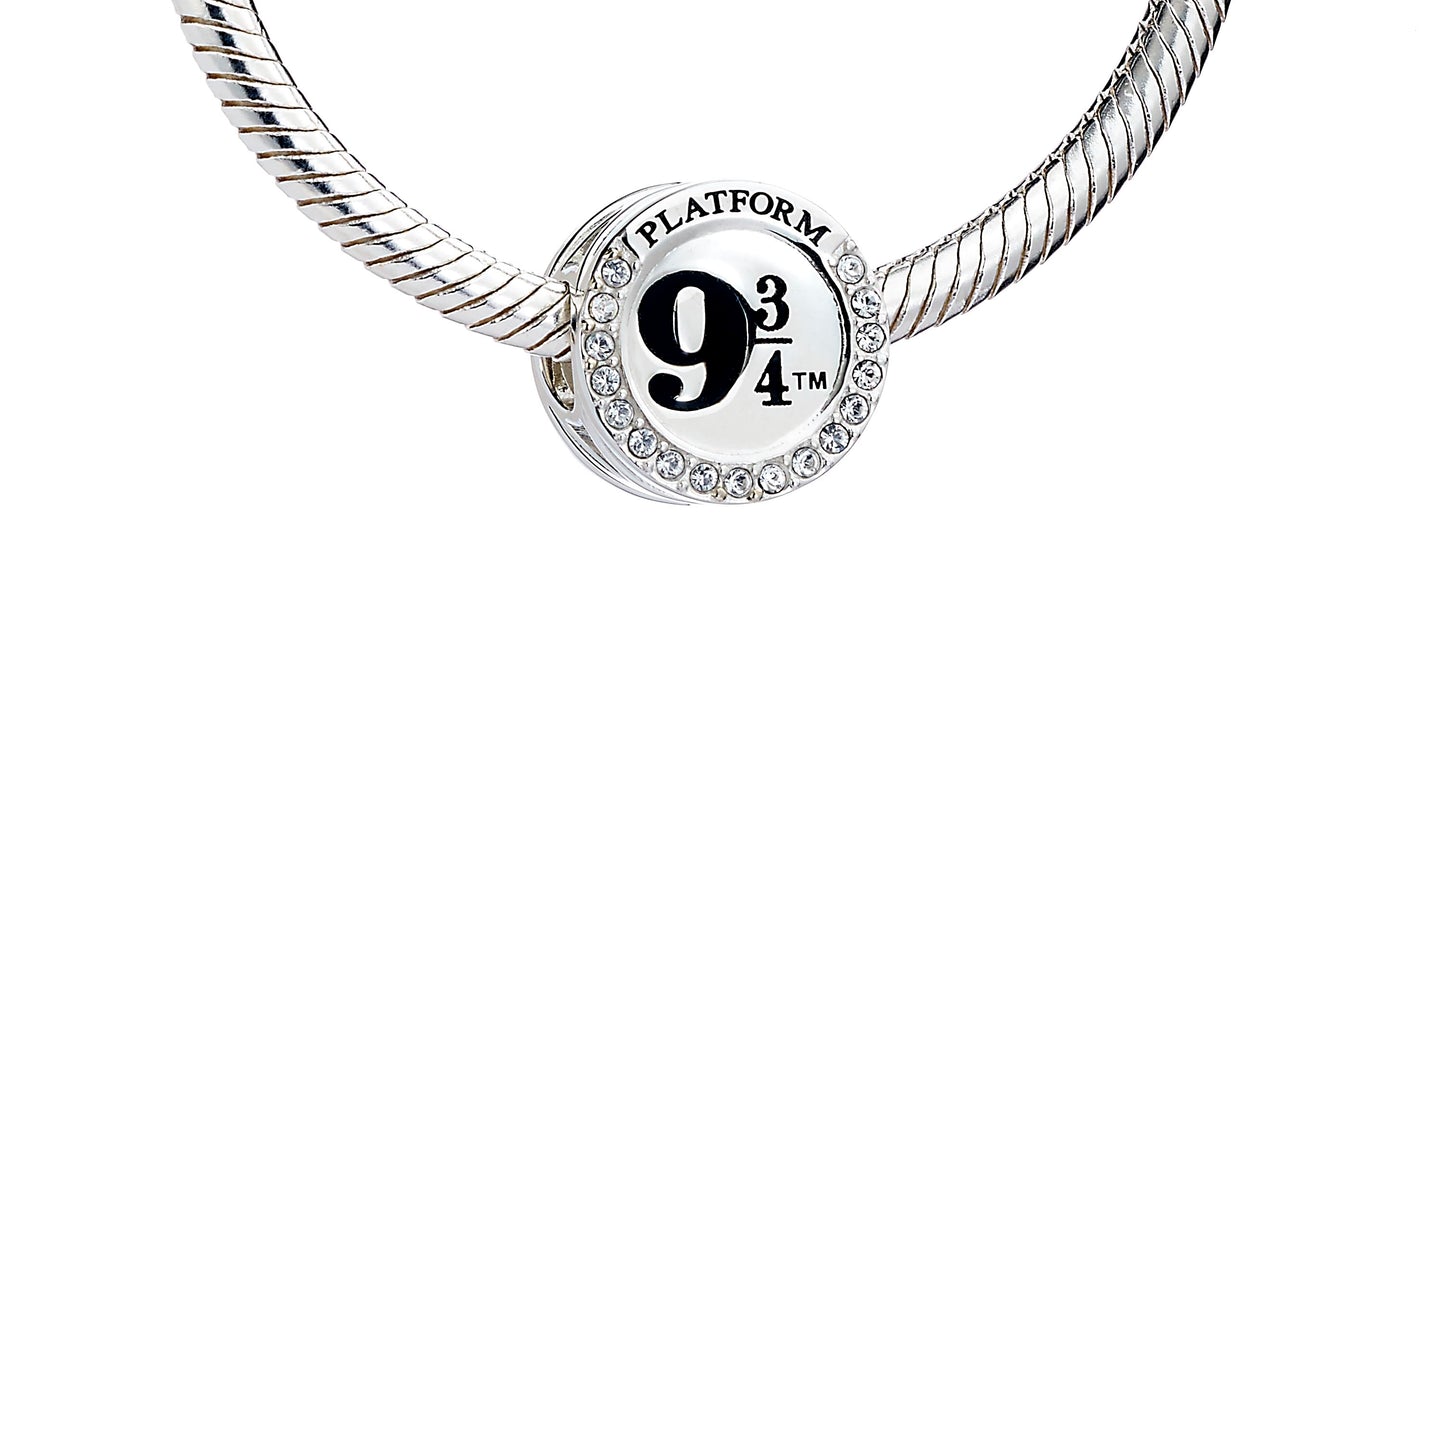 Harry Potter Platform 9 3/4 Charm Bead Embellished with Crystals - Sterling Silver